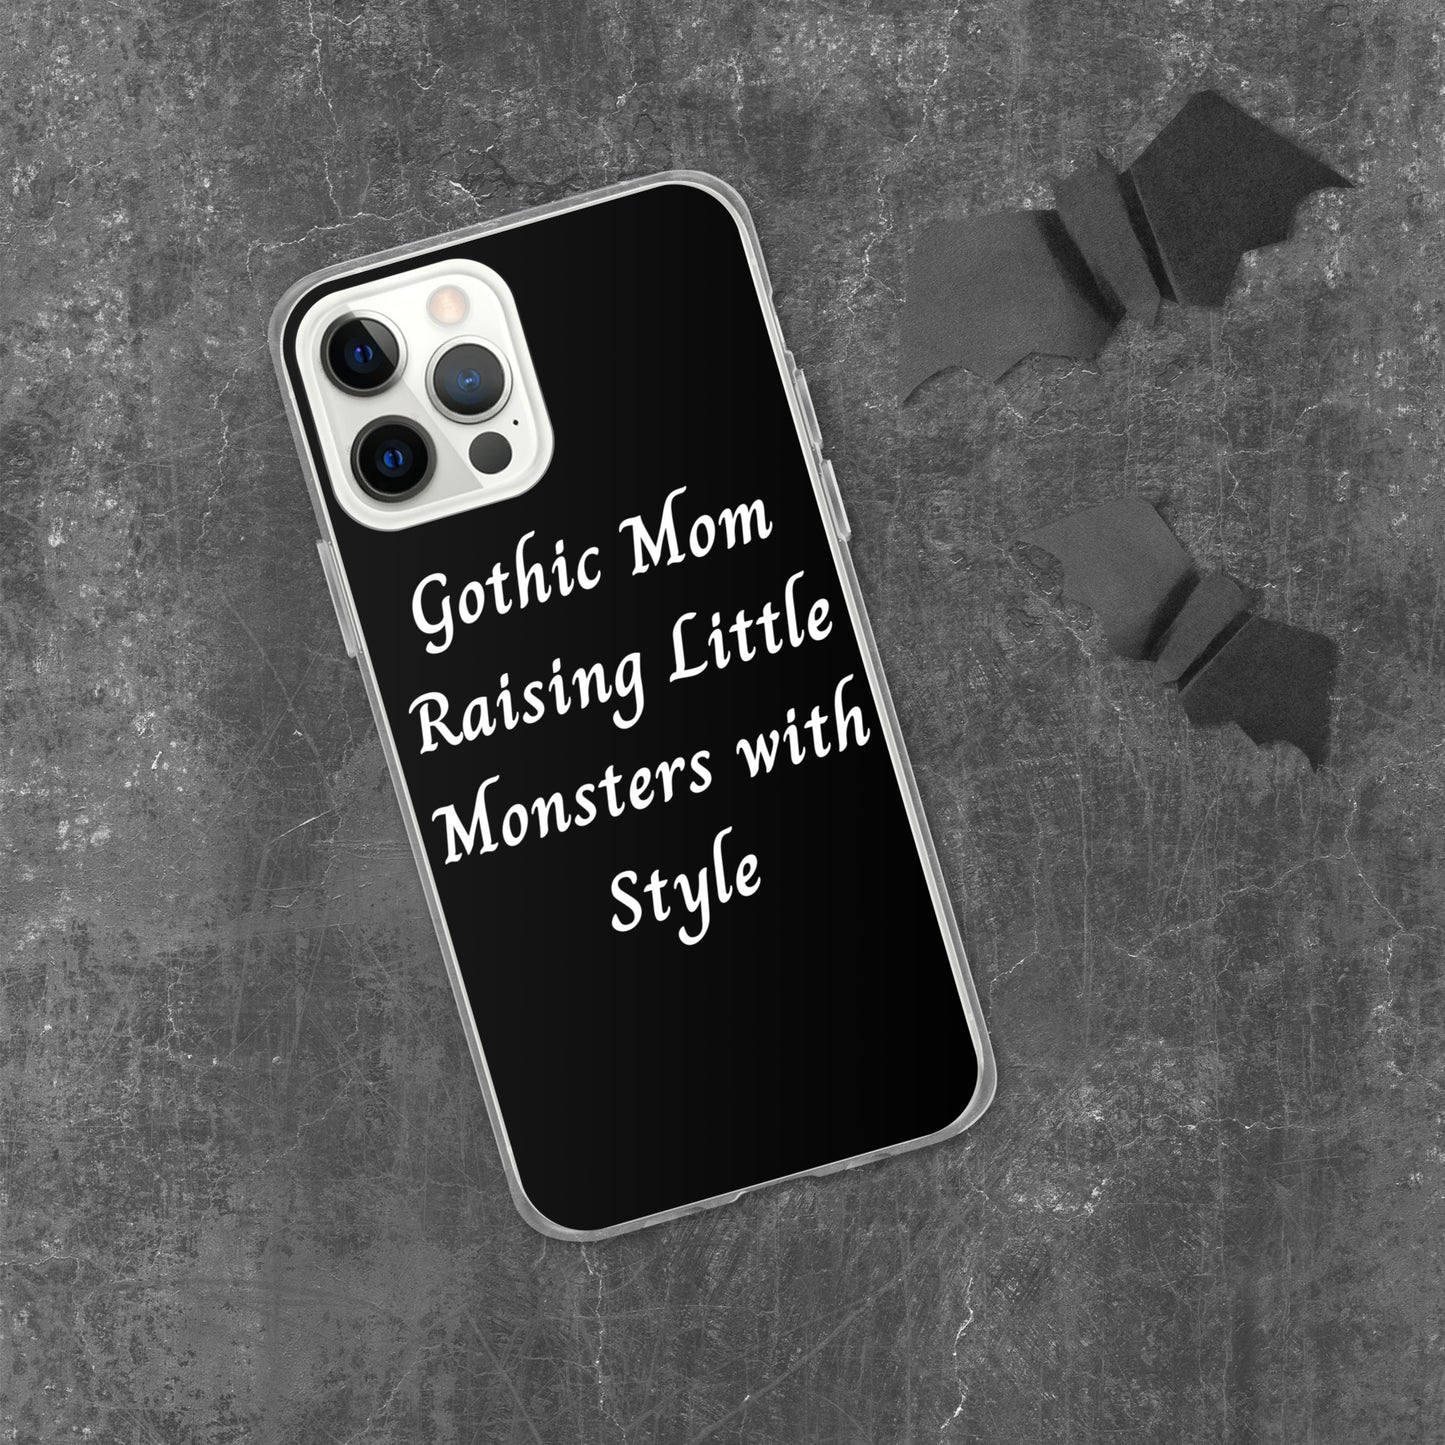 Gothic Mom Raising Little Case for iPhone®